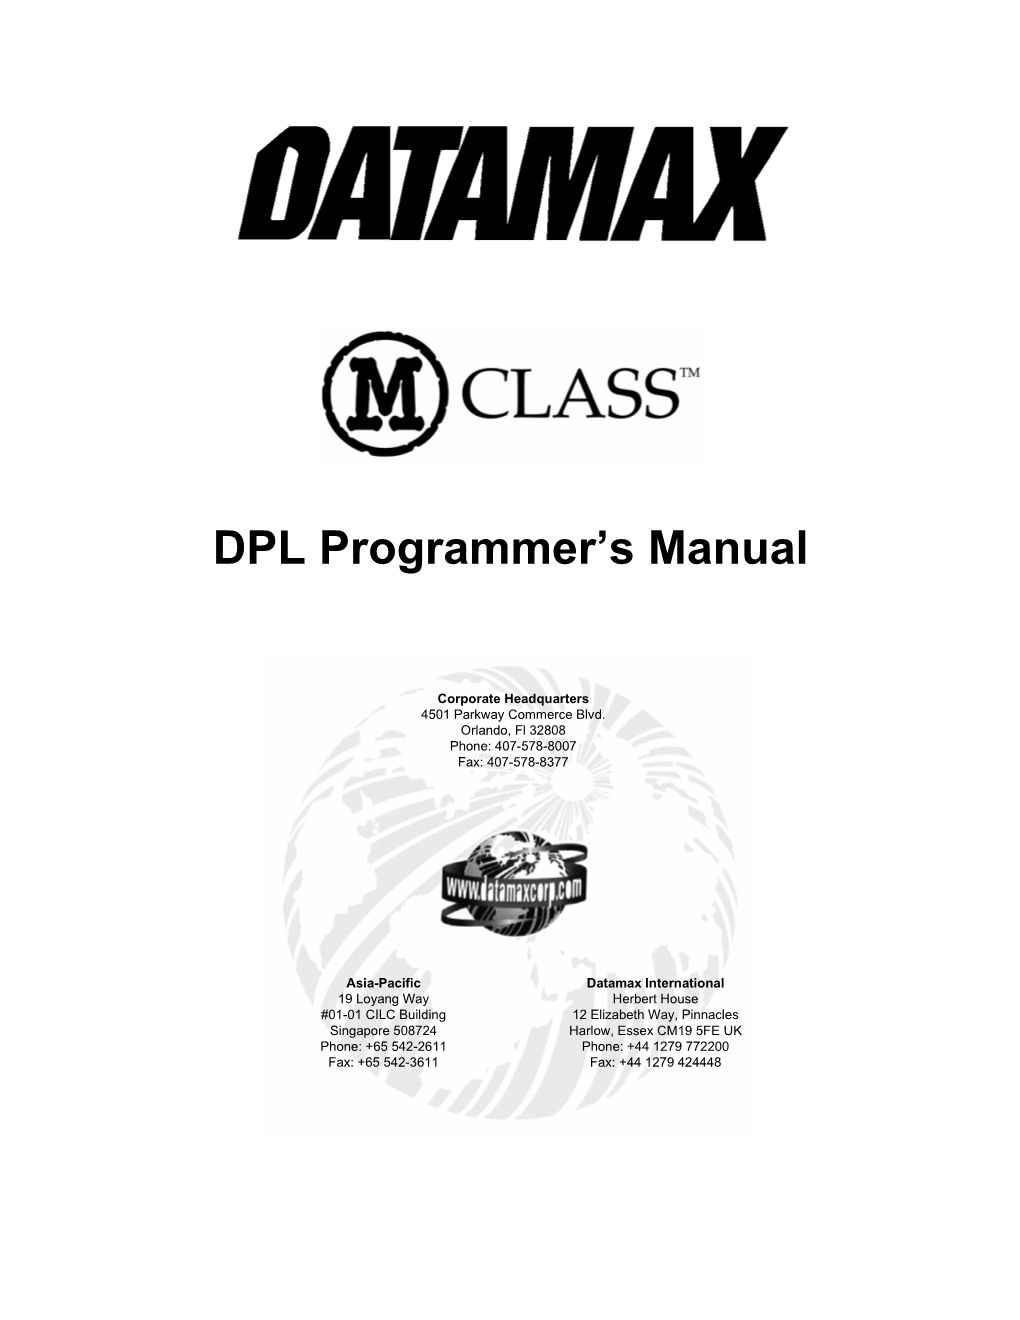 DPL Programmer's Manual